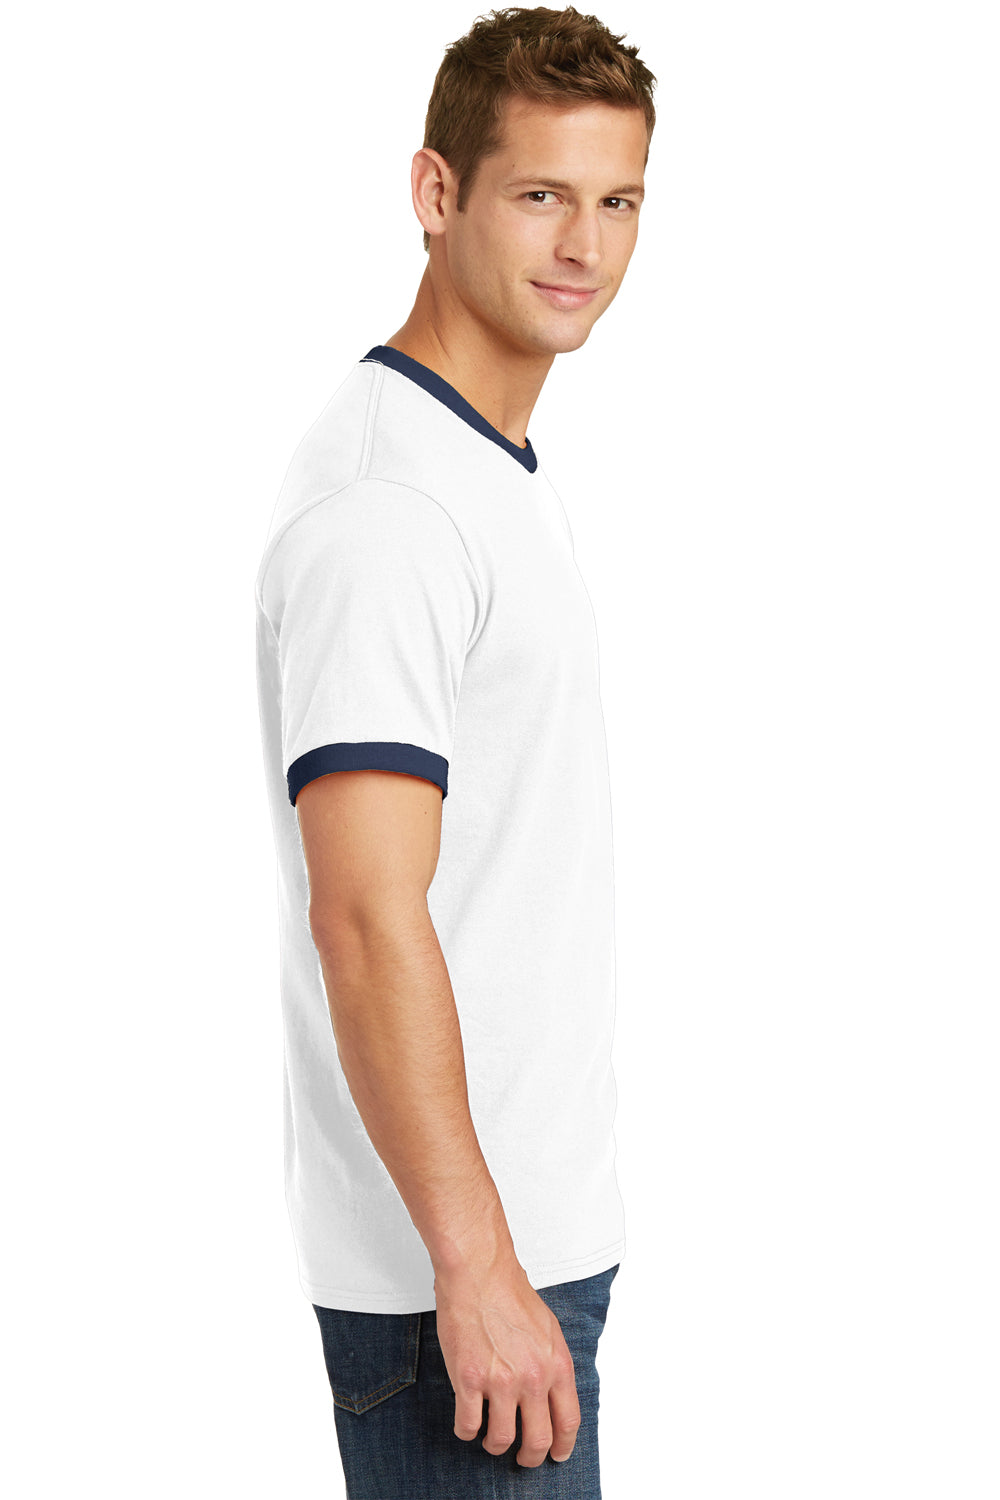 Port & Company PC54R Mens Core Ringer Short Sleeve Crewneck T-Shirt White/Navy Blue Side